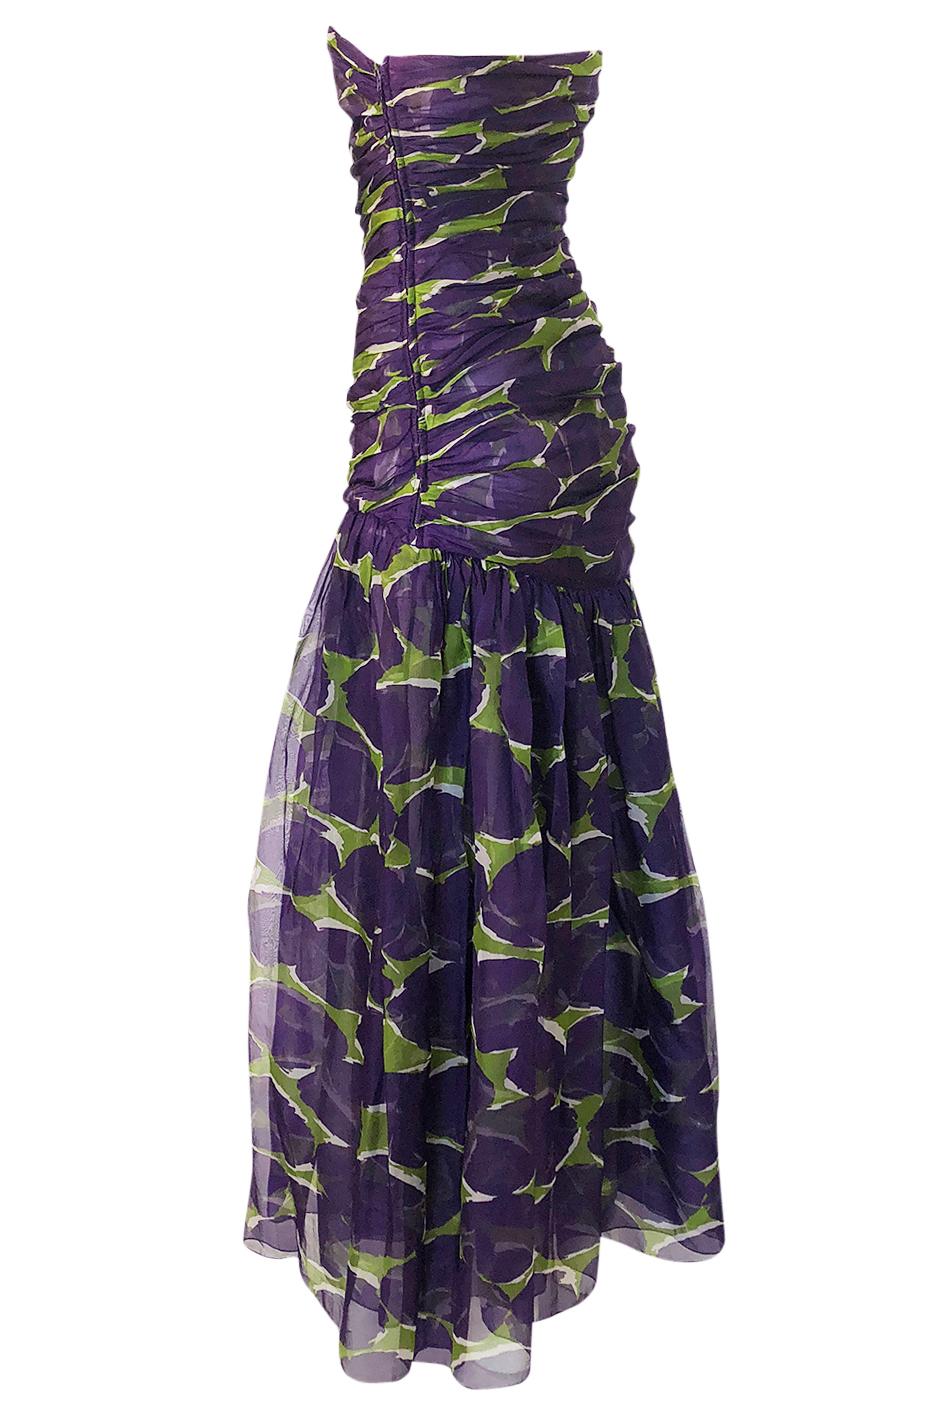 Women's c1985 Yves Saint Laurent Strapless Purple & Green Silk Voile Dress